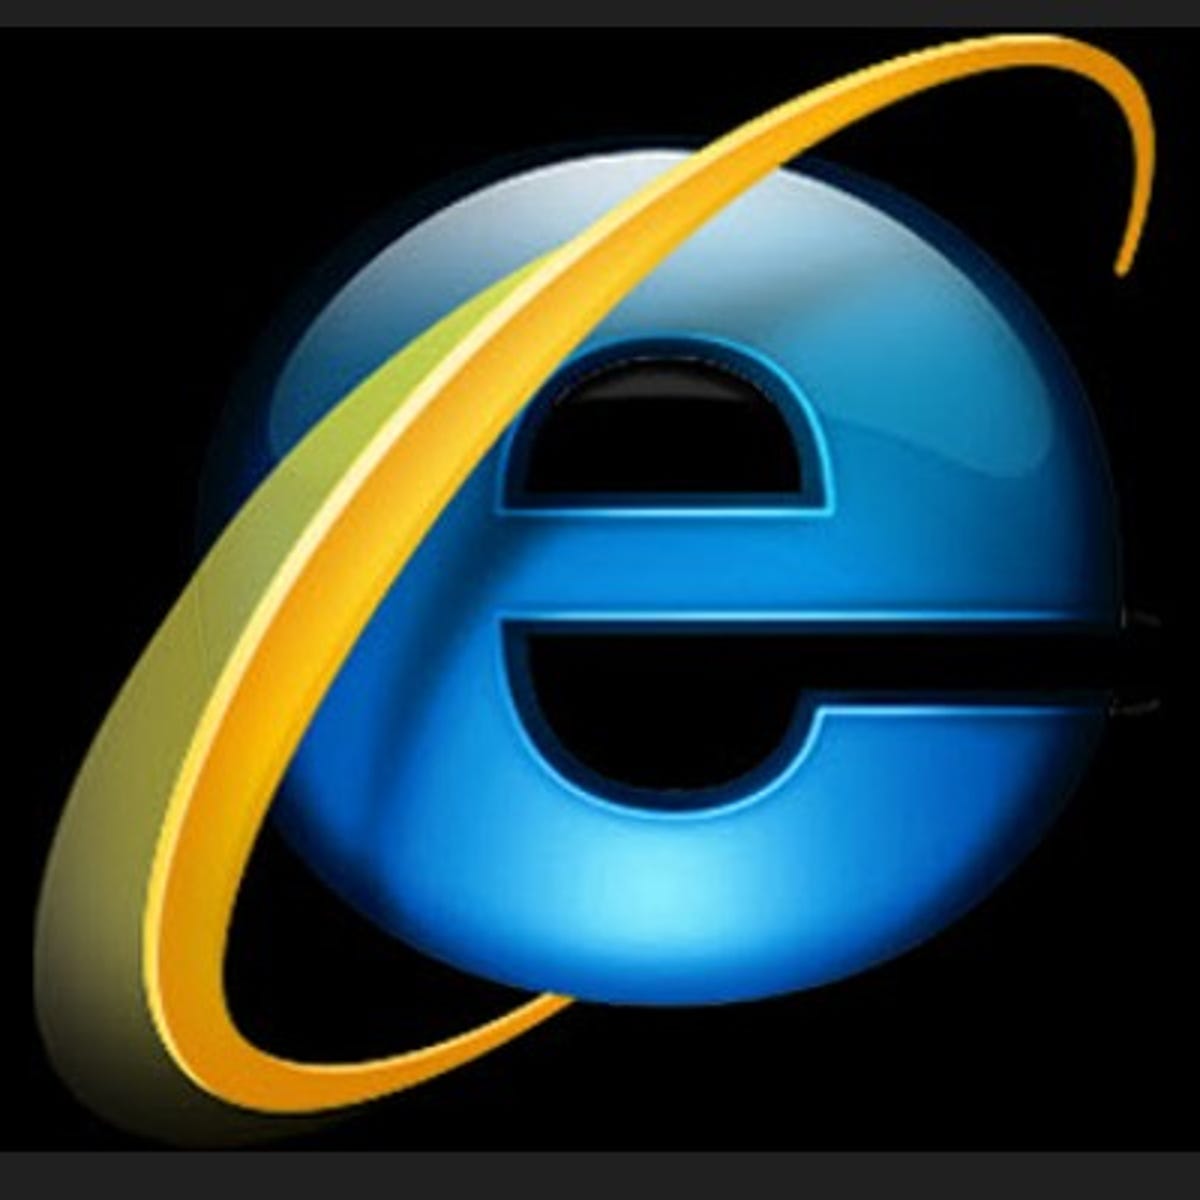 June 15: It's the end of the Internet Explorer era | ZDNET